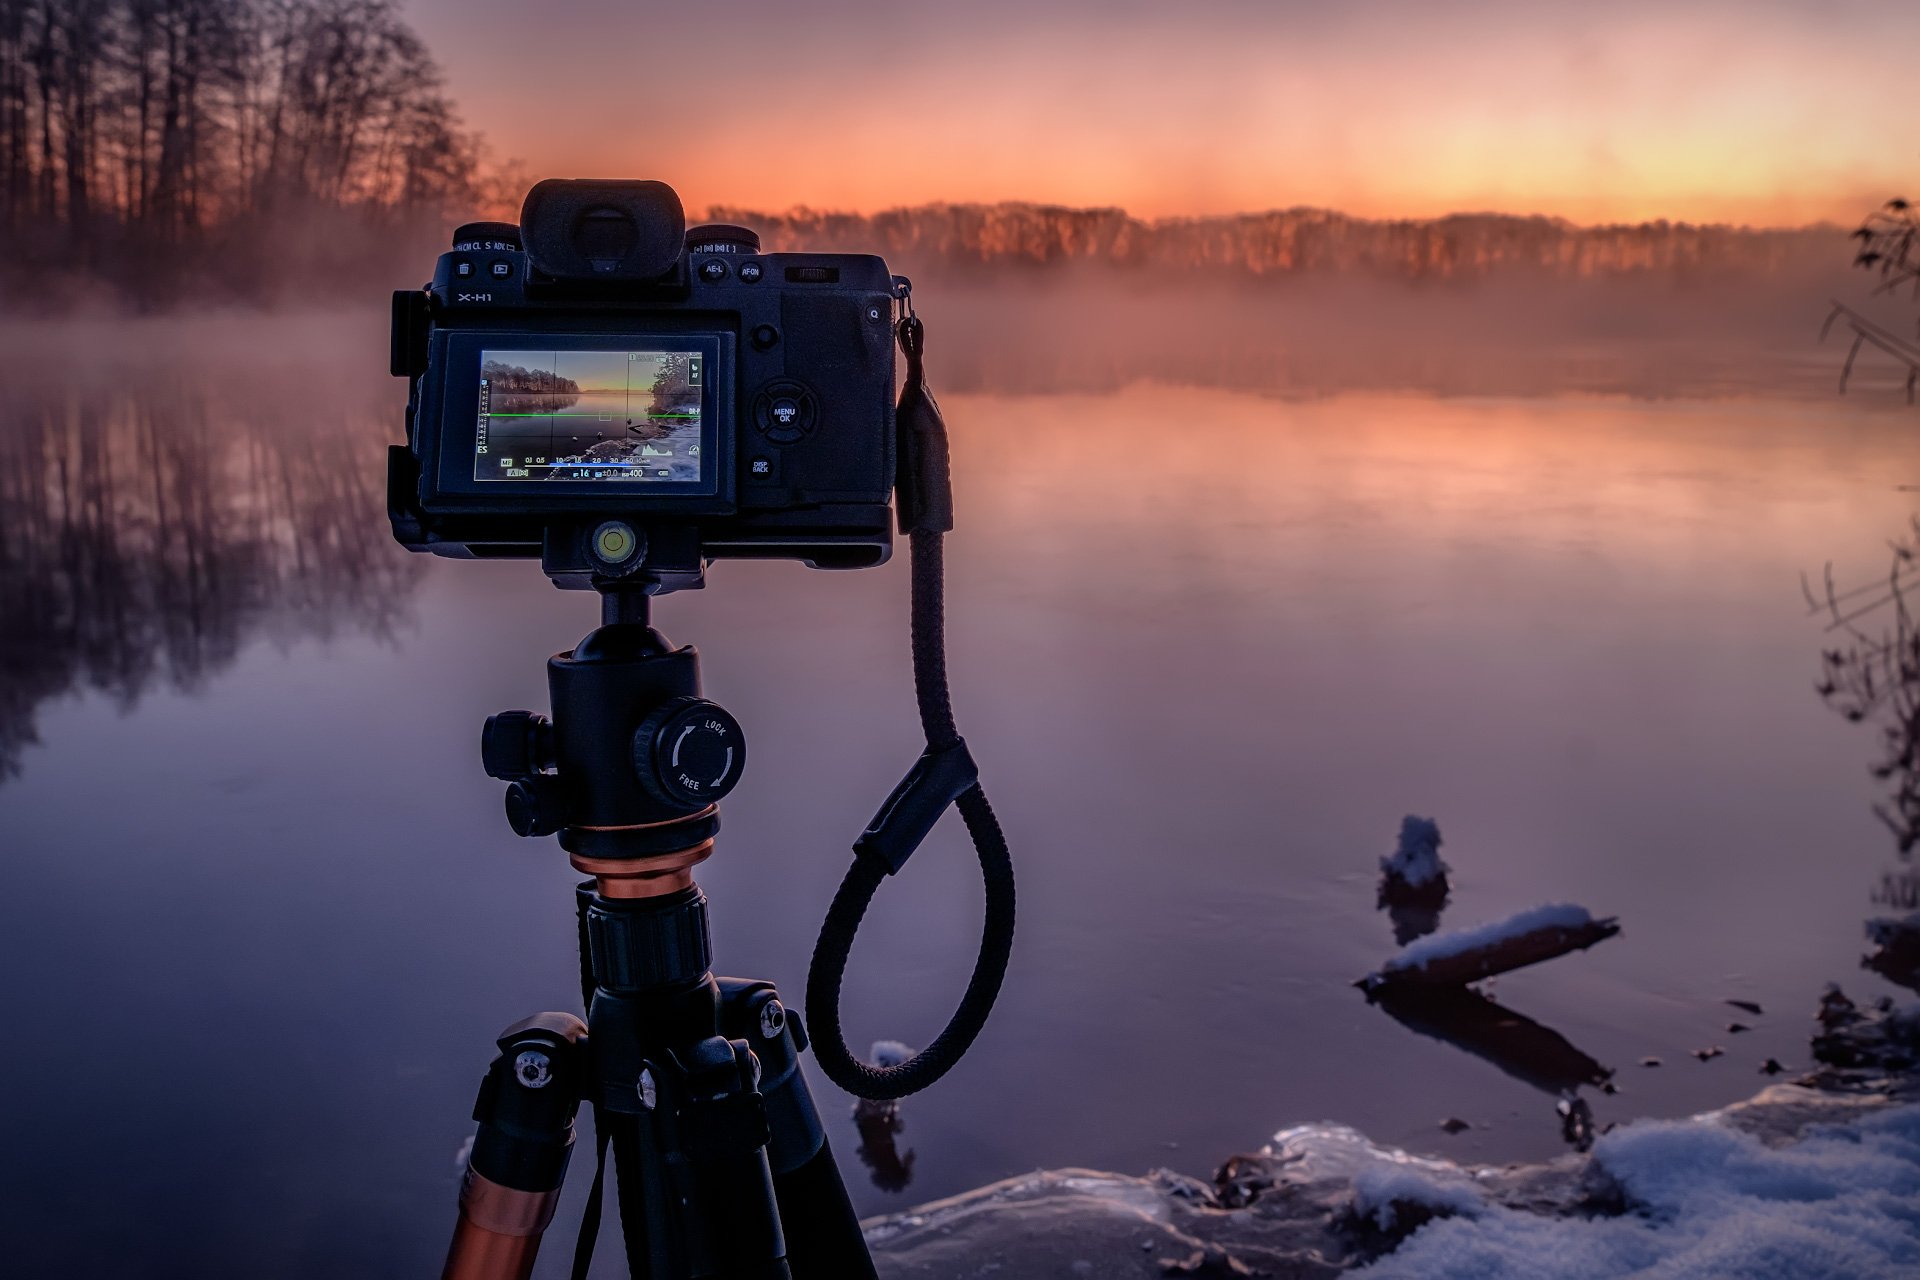 шатура, фотоаппарат, fujufilm, x-h1, пейзаж, озеро, белое, зима, лед, снег, вода, Андрей Чиж